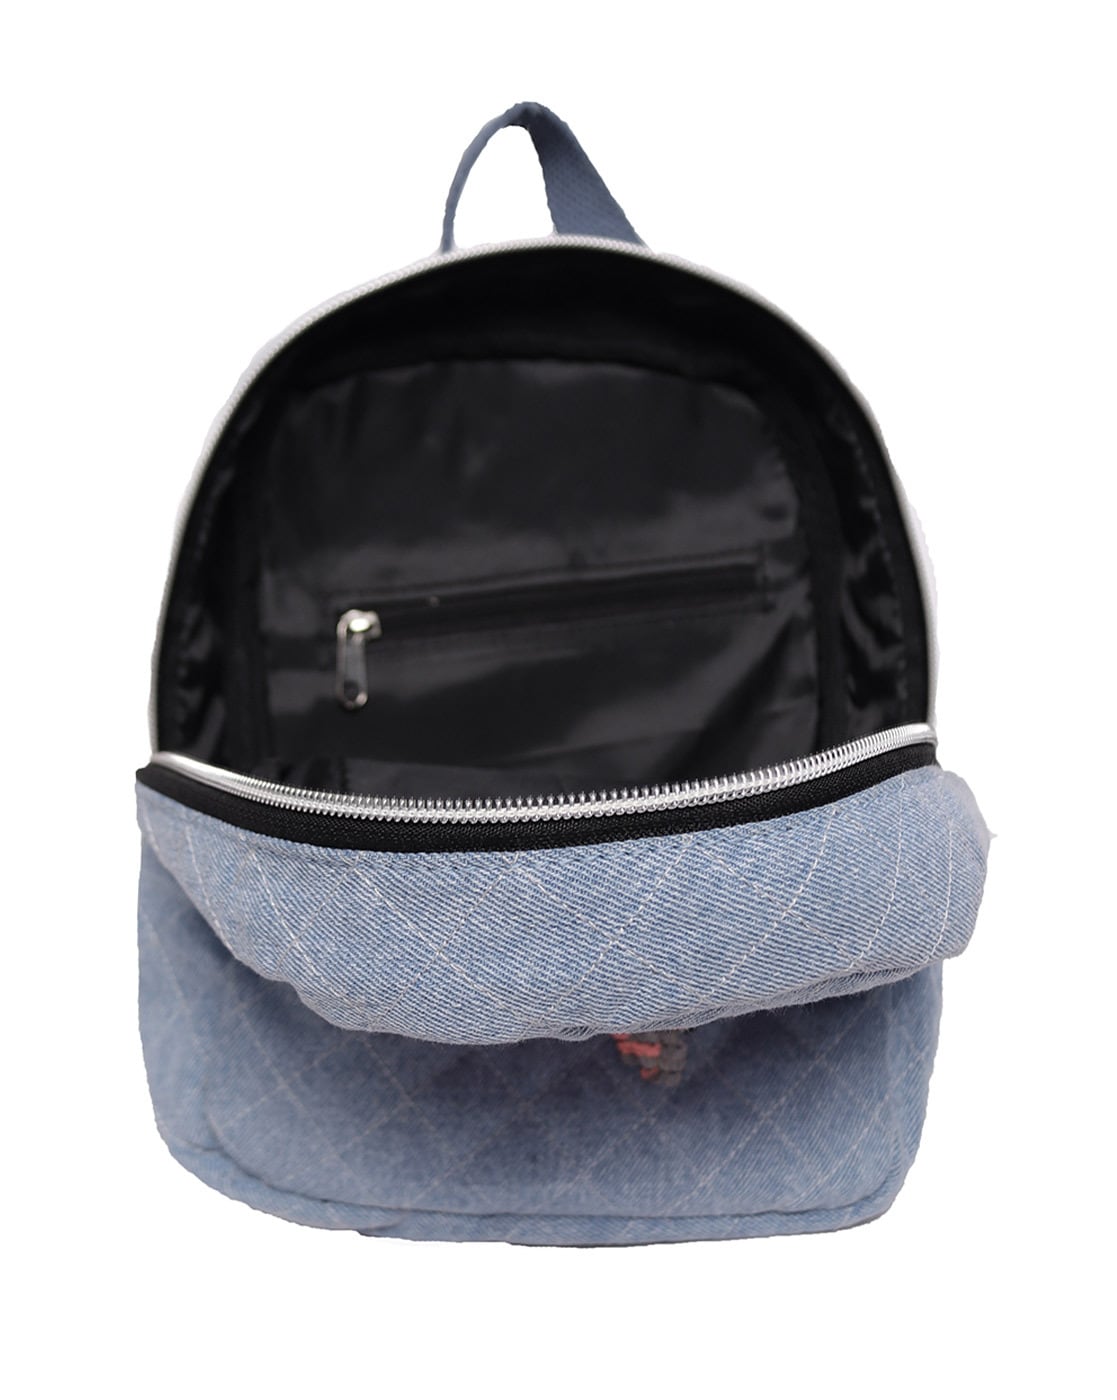 Organic & Recycled Blue Denim with Leather Unisex Backpack | WeMe – WeMe  Store